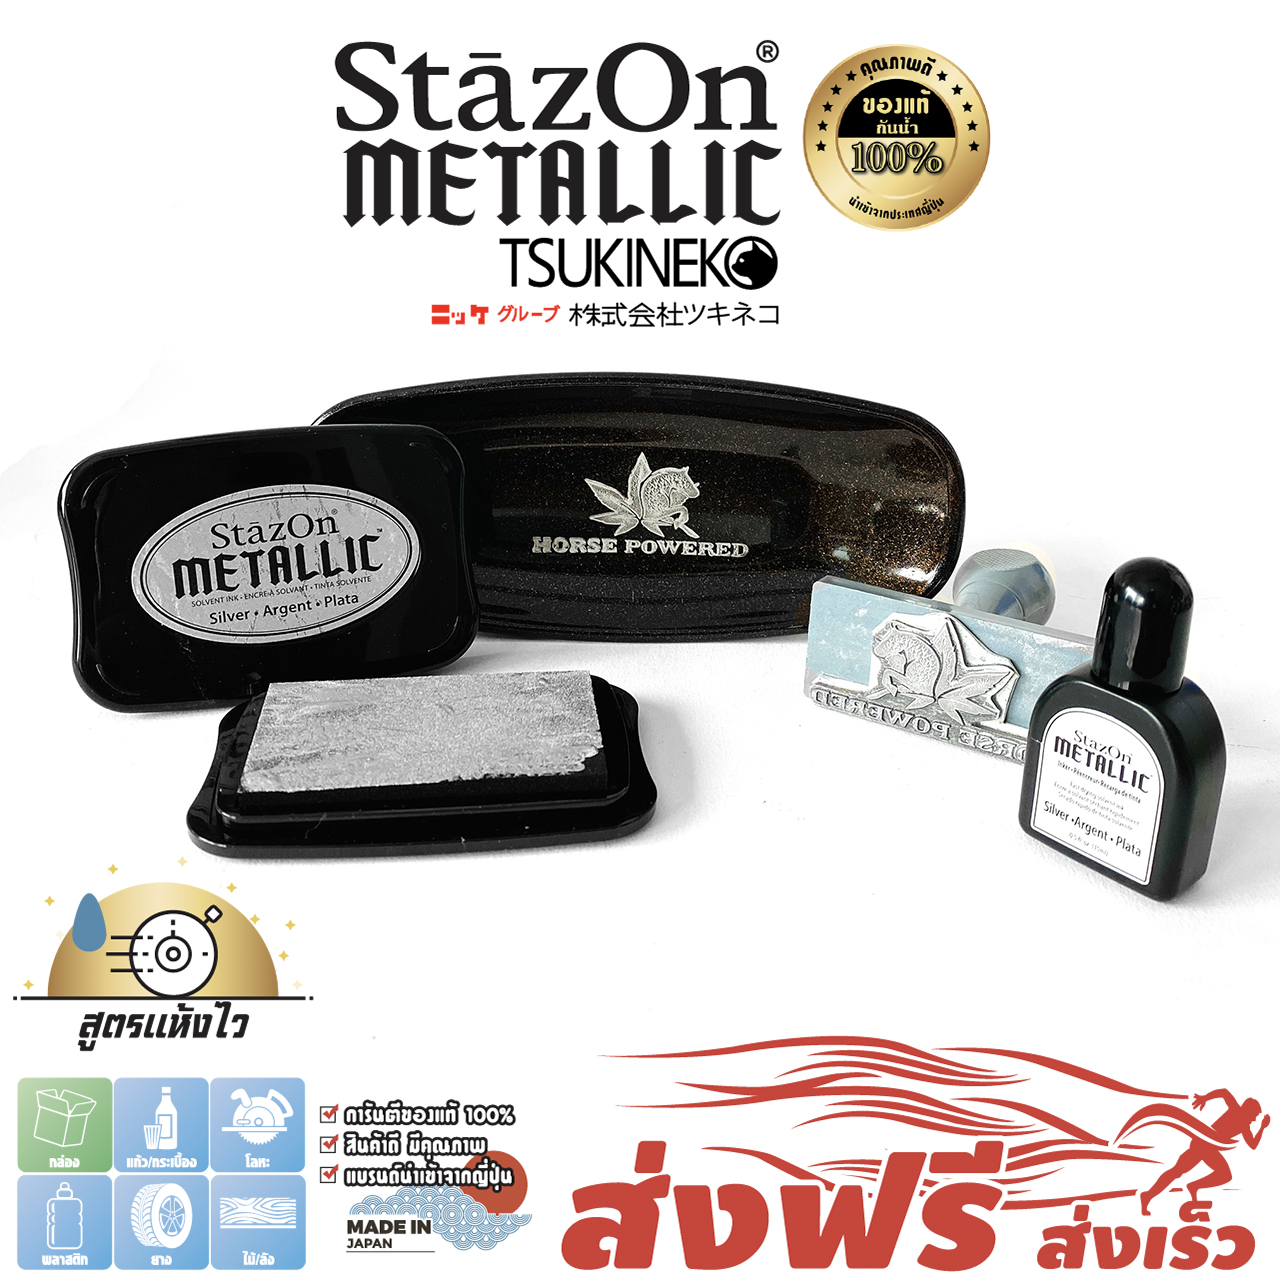 StazOn Ink Pad Metallic Platinum